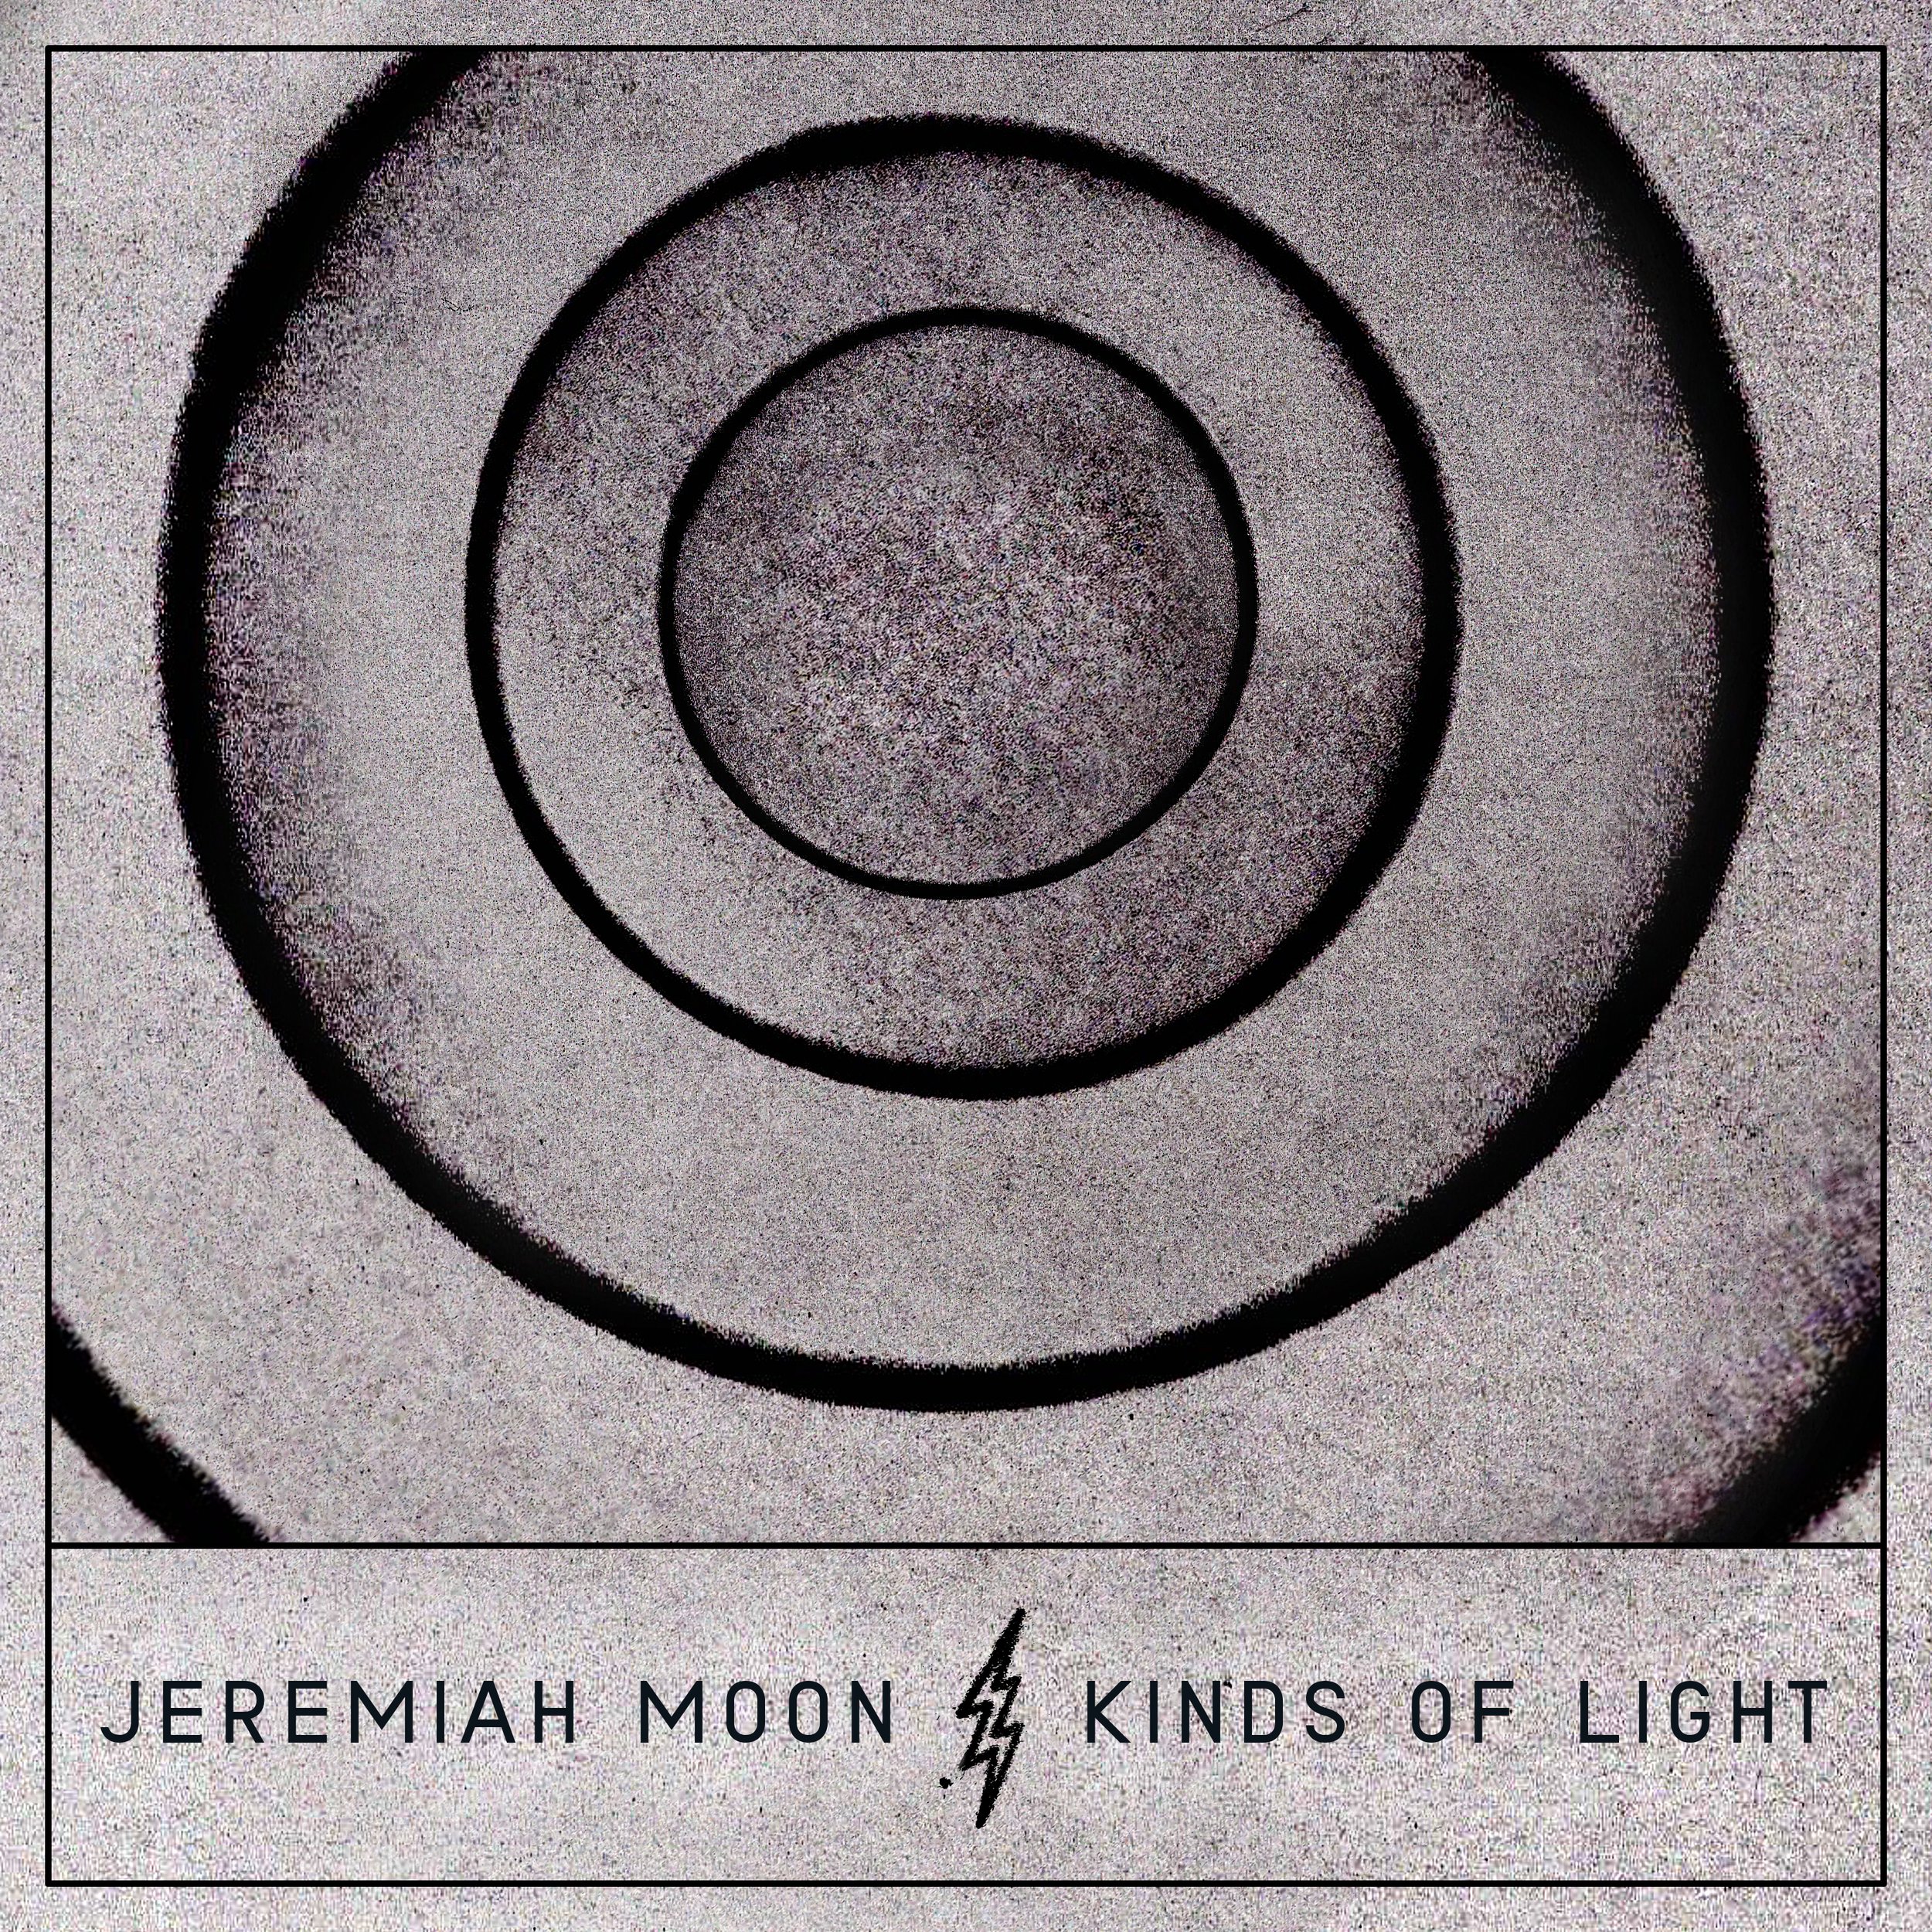 Jeremiah Moon